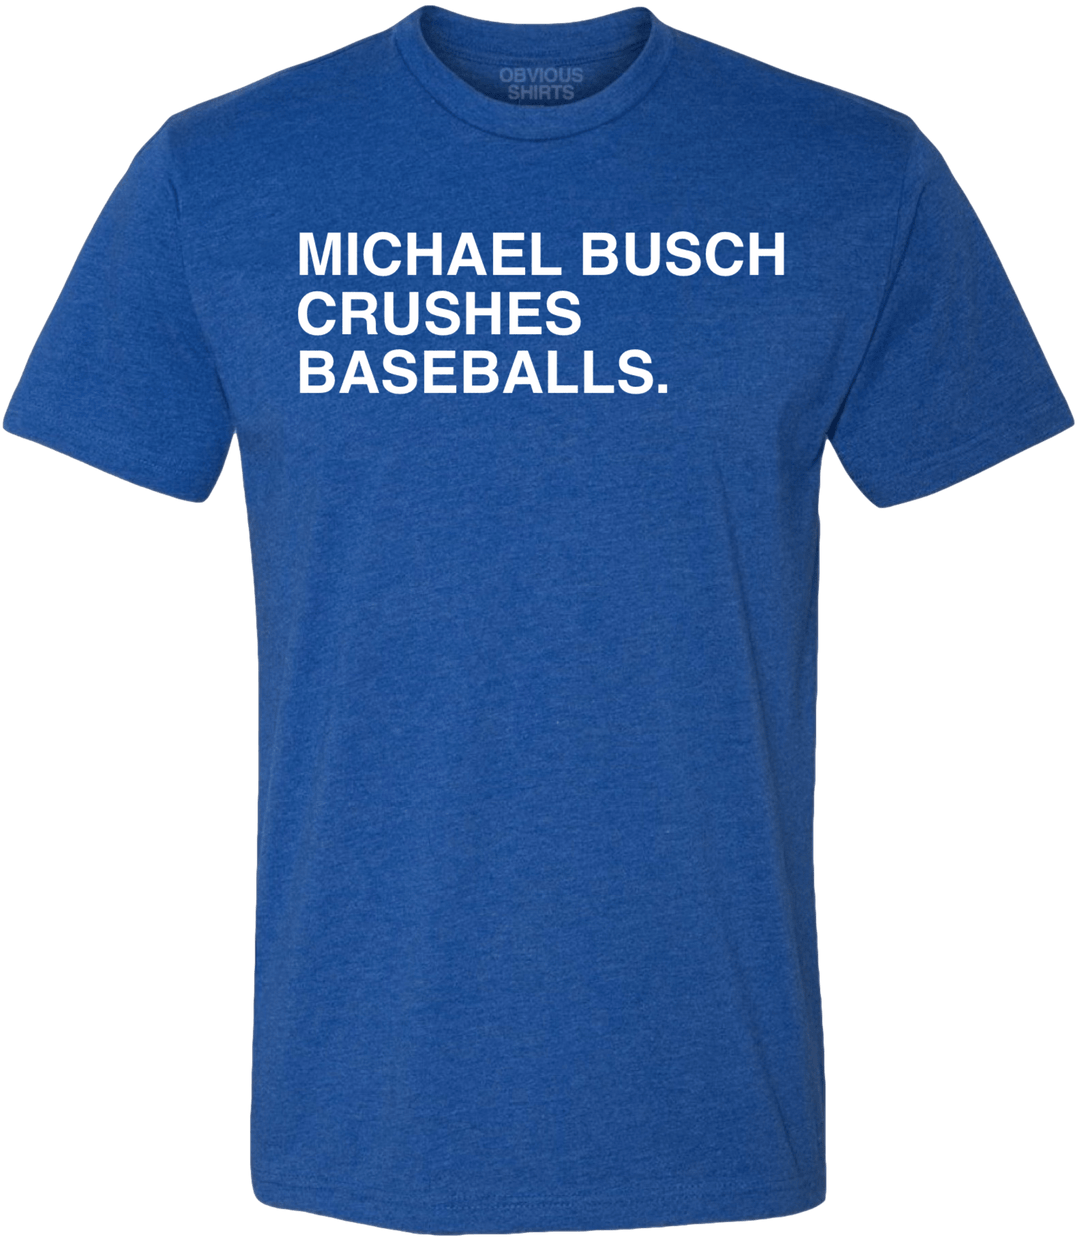 MICHAEL BUSCH CRUSHES BASEBALLS. - OBVIOUS SHIRTS